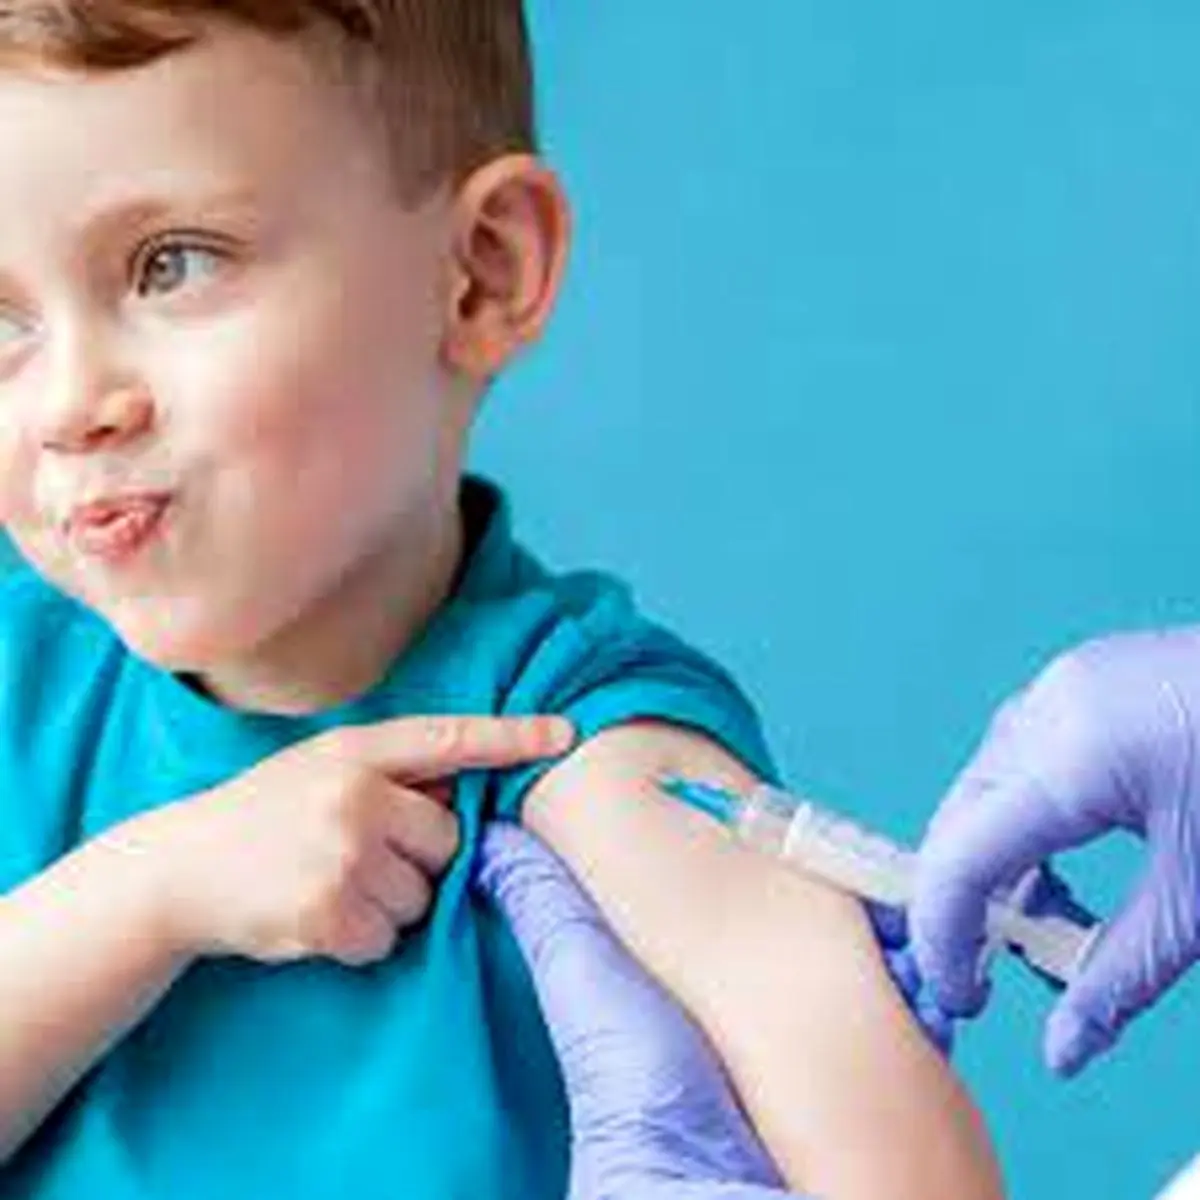 چرایی اهمیت واکسیناسیون کرونا در کودکان 